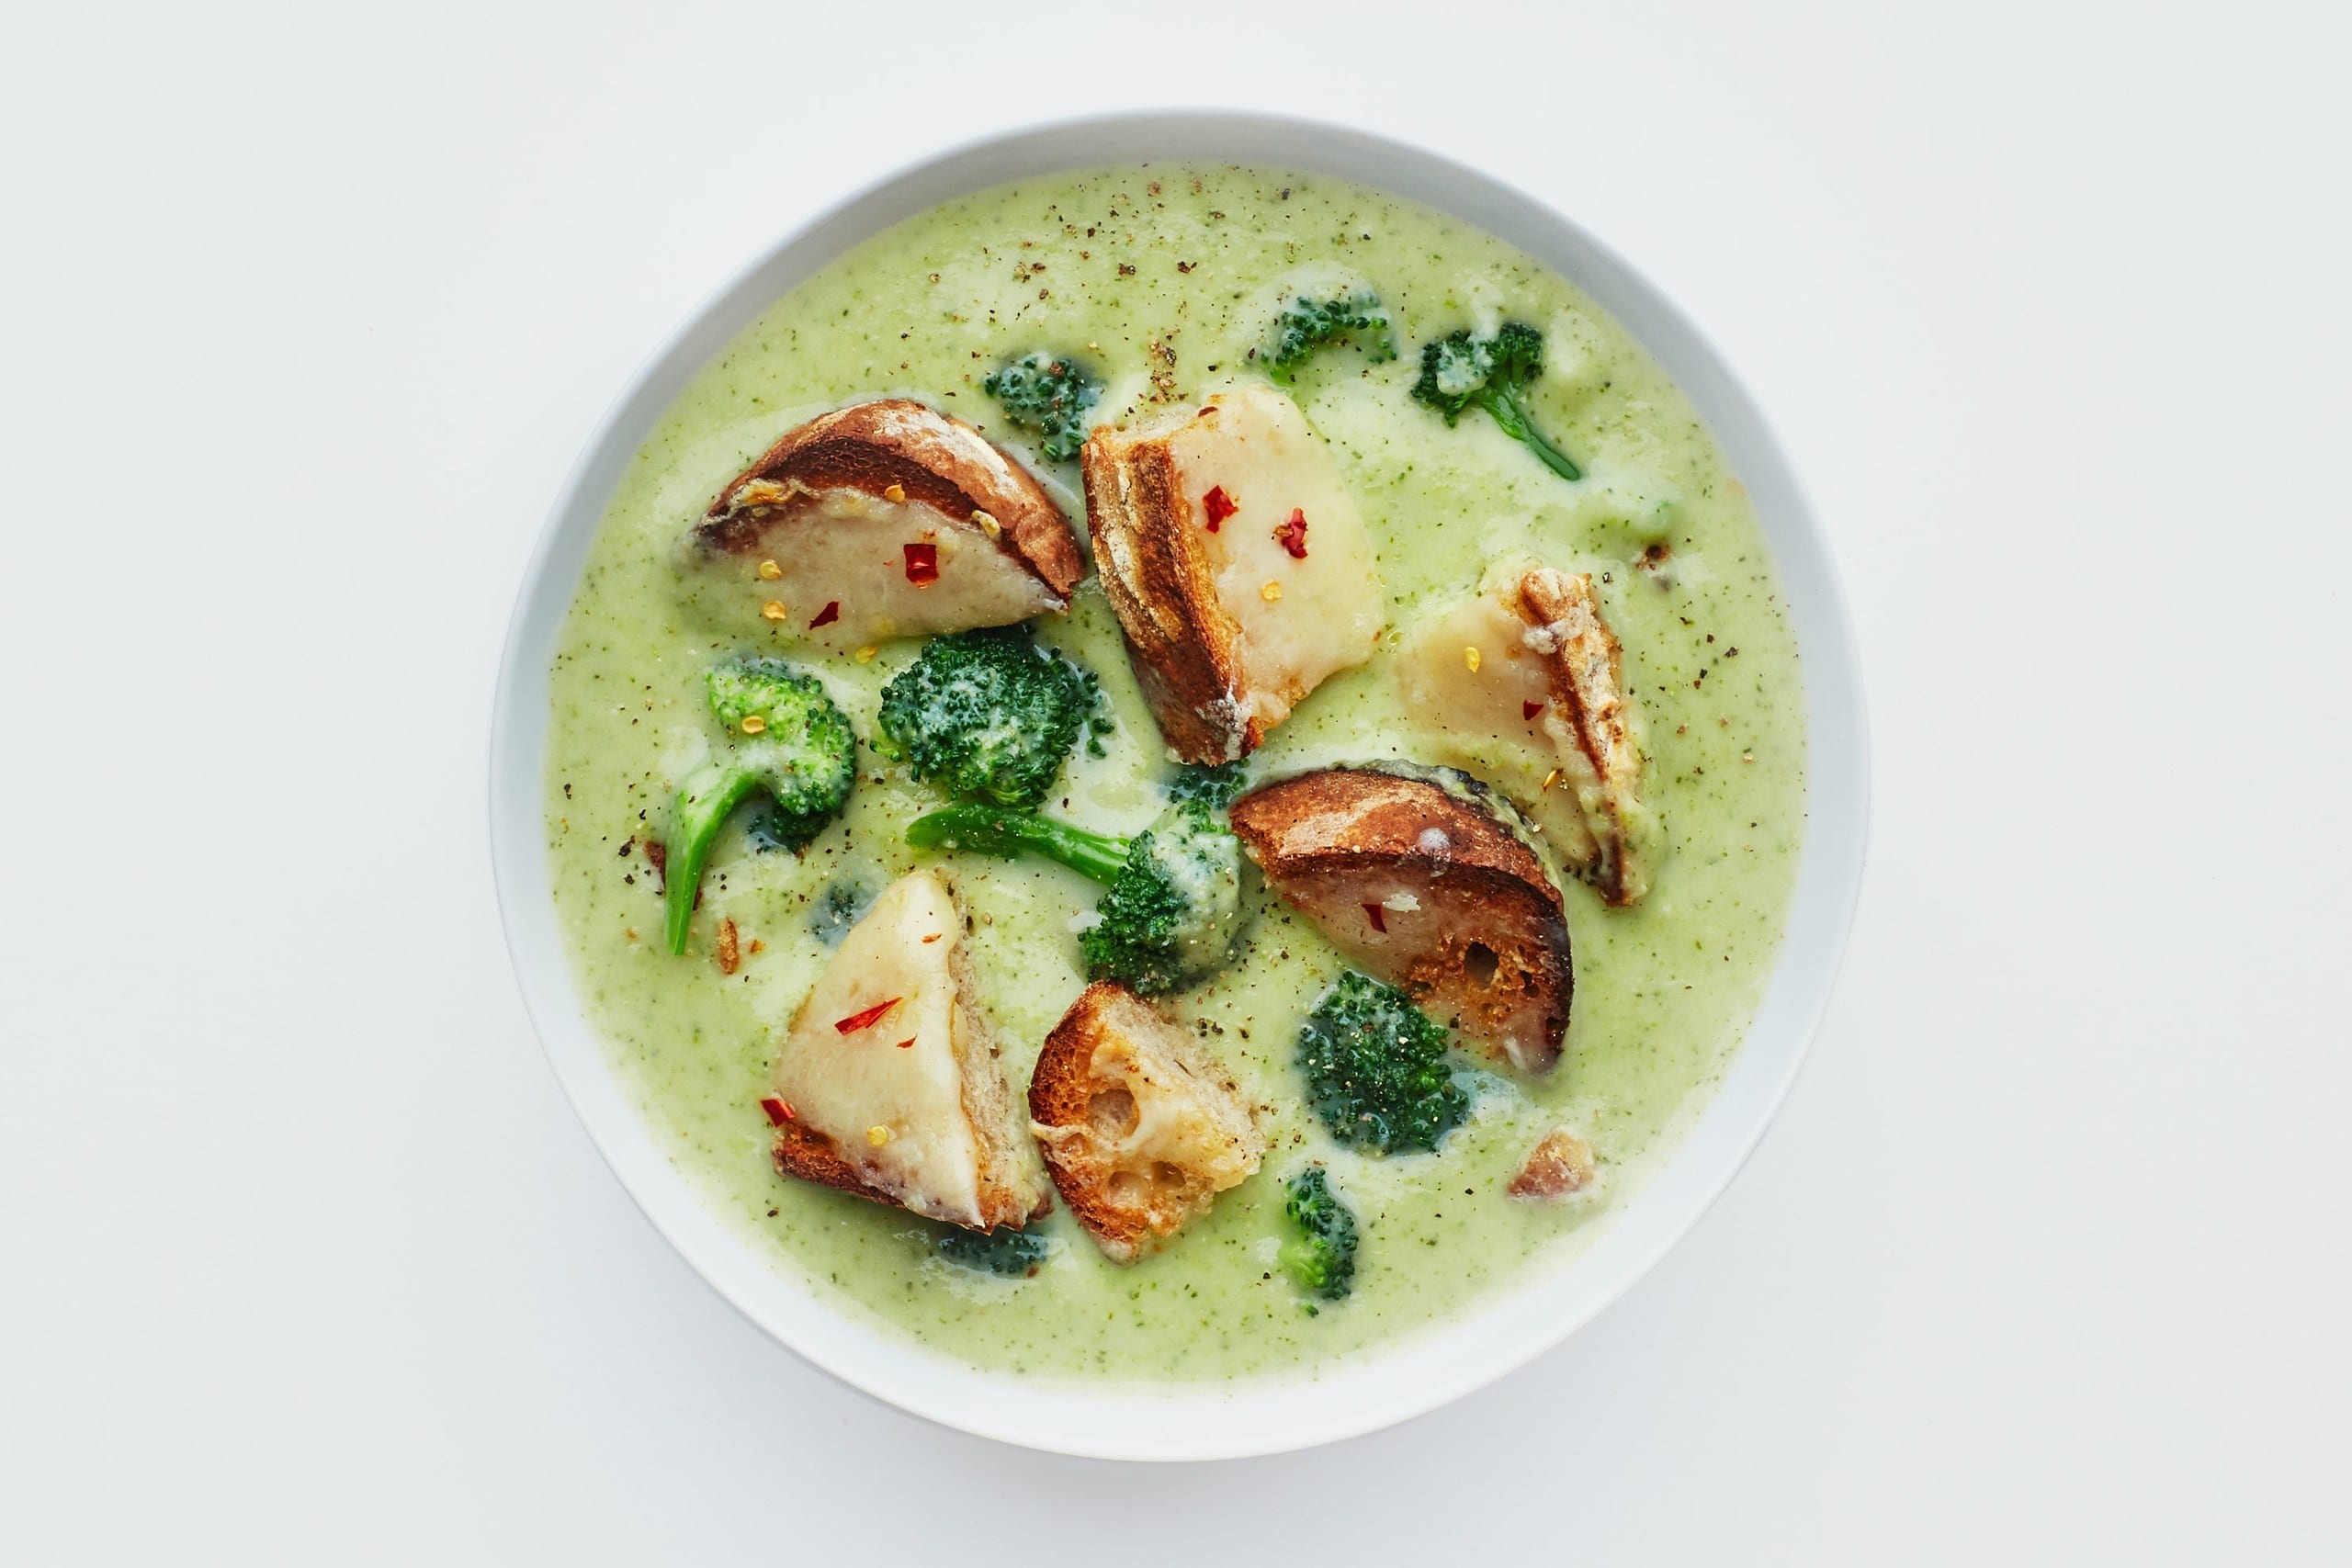 Easy Soup Recipes, Broccoli Cheddar Soup, Weeknight Soup recipes, comfort food recipes, healthy recipes